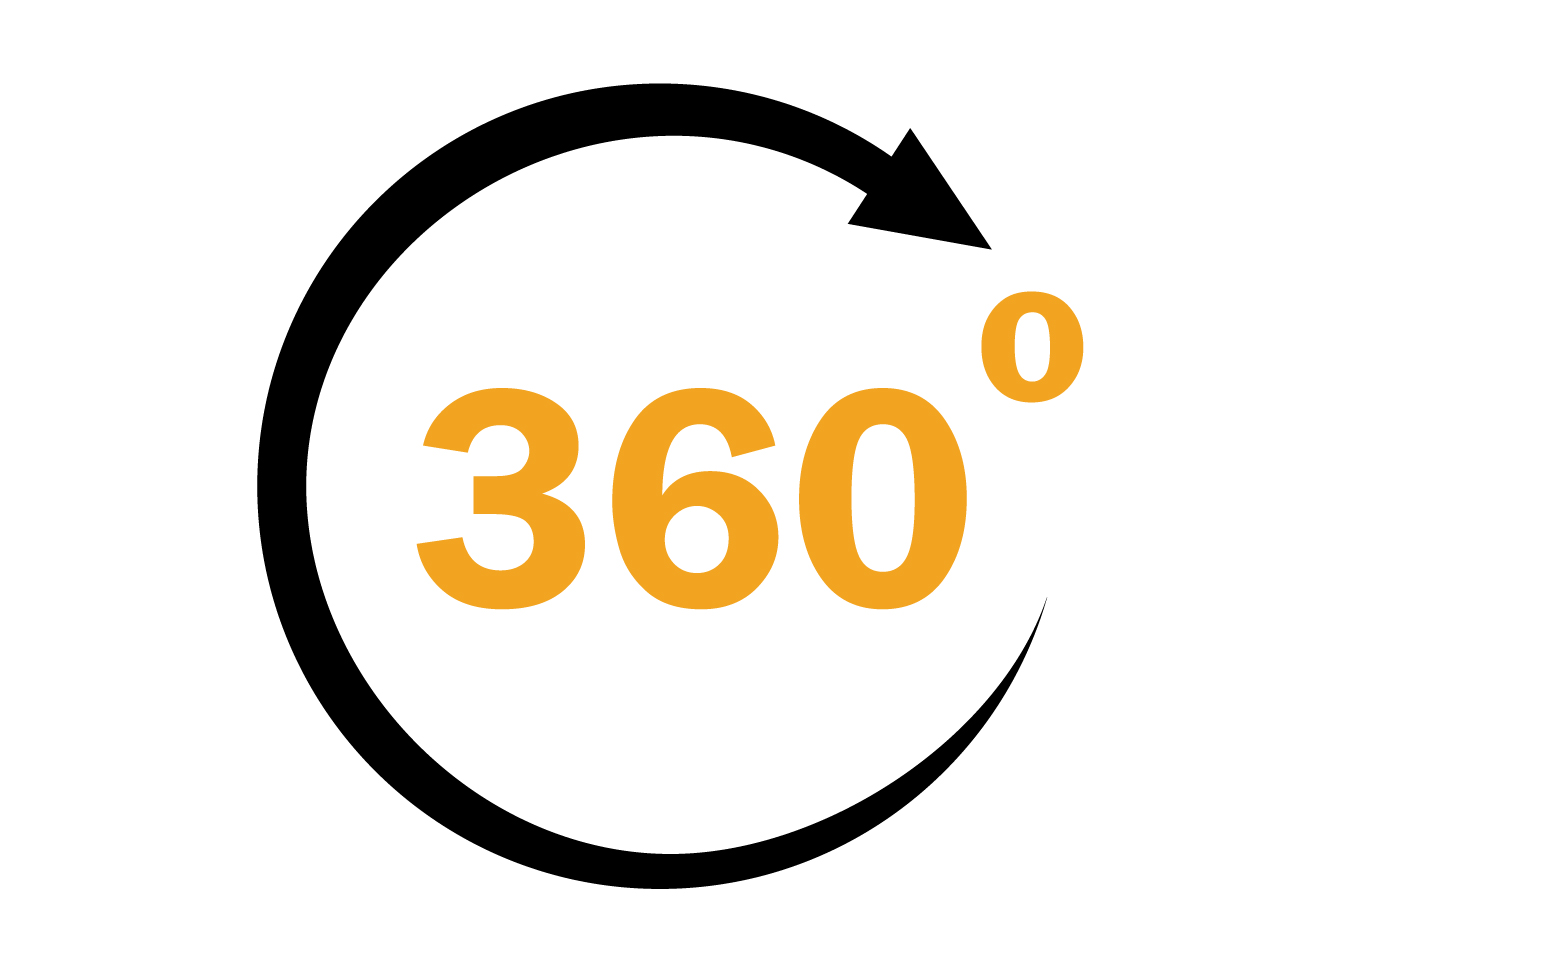 360 degree angle rotation icon symbol logo version v3